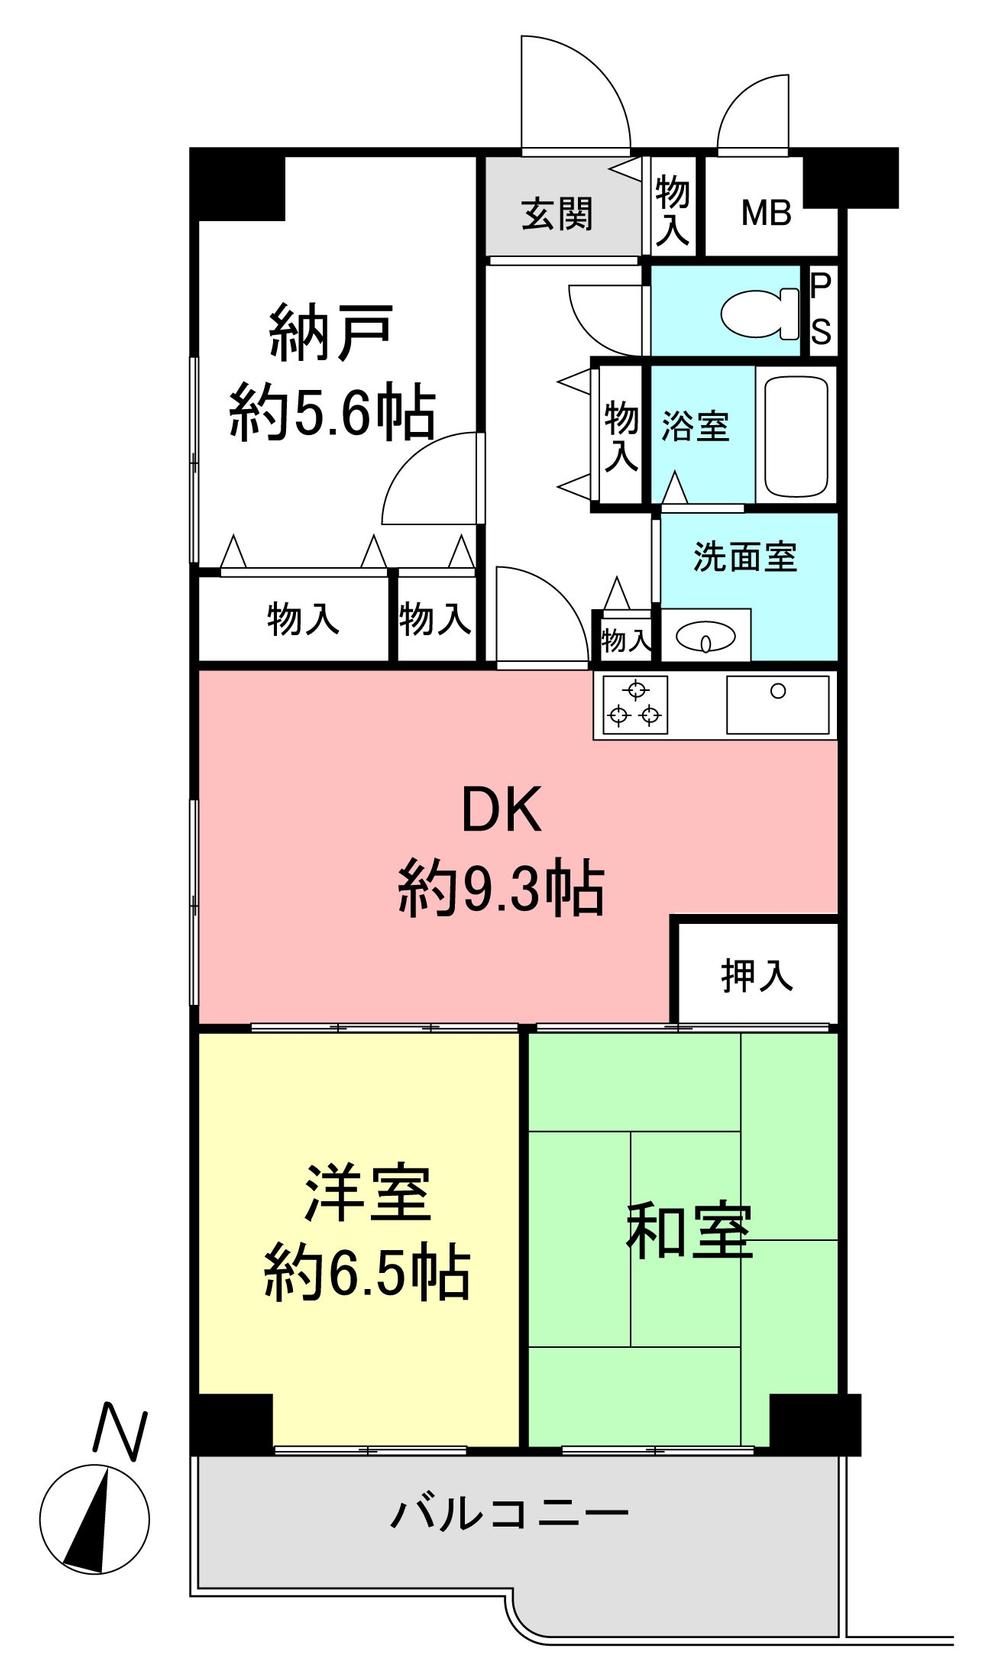 Floor plan. 2LDK + S (storeroom), Price 12.3 million yen, Footprint 64.9 sq m , Balcony area 7.02 sq m